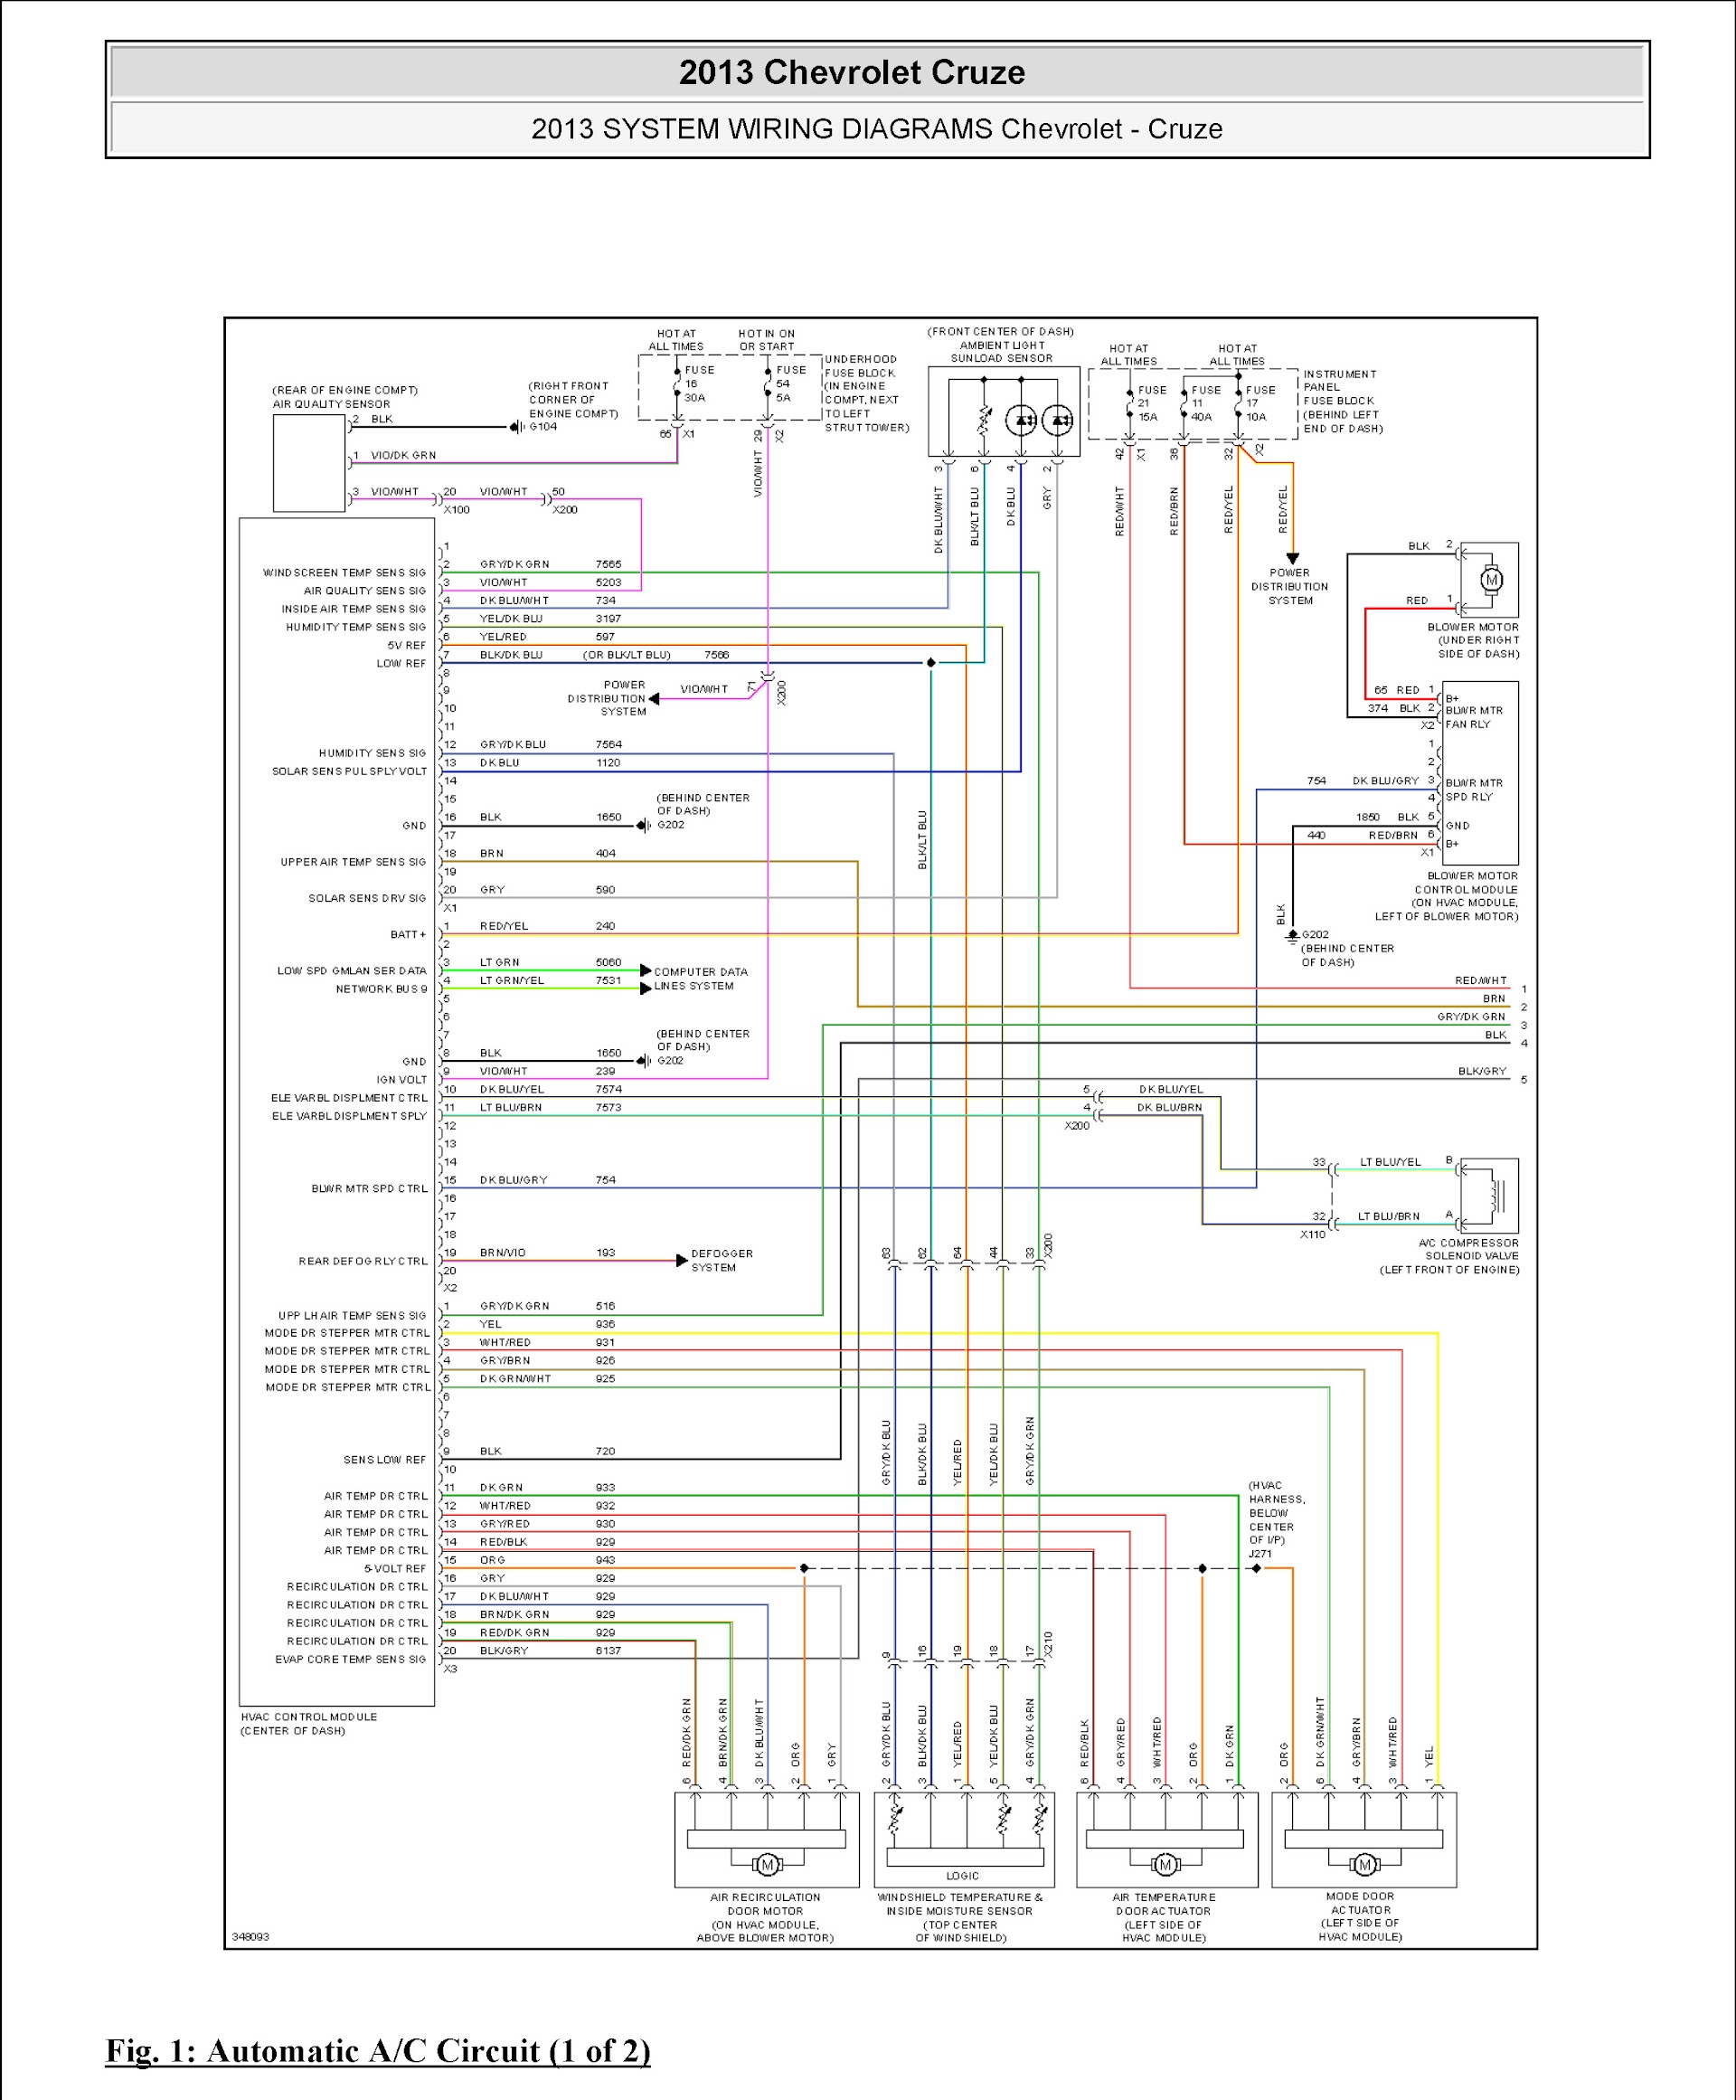 CONTENTS: 2010-2016 Chevrolet Cruze Repair Manual, system wiring diagram